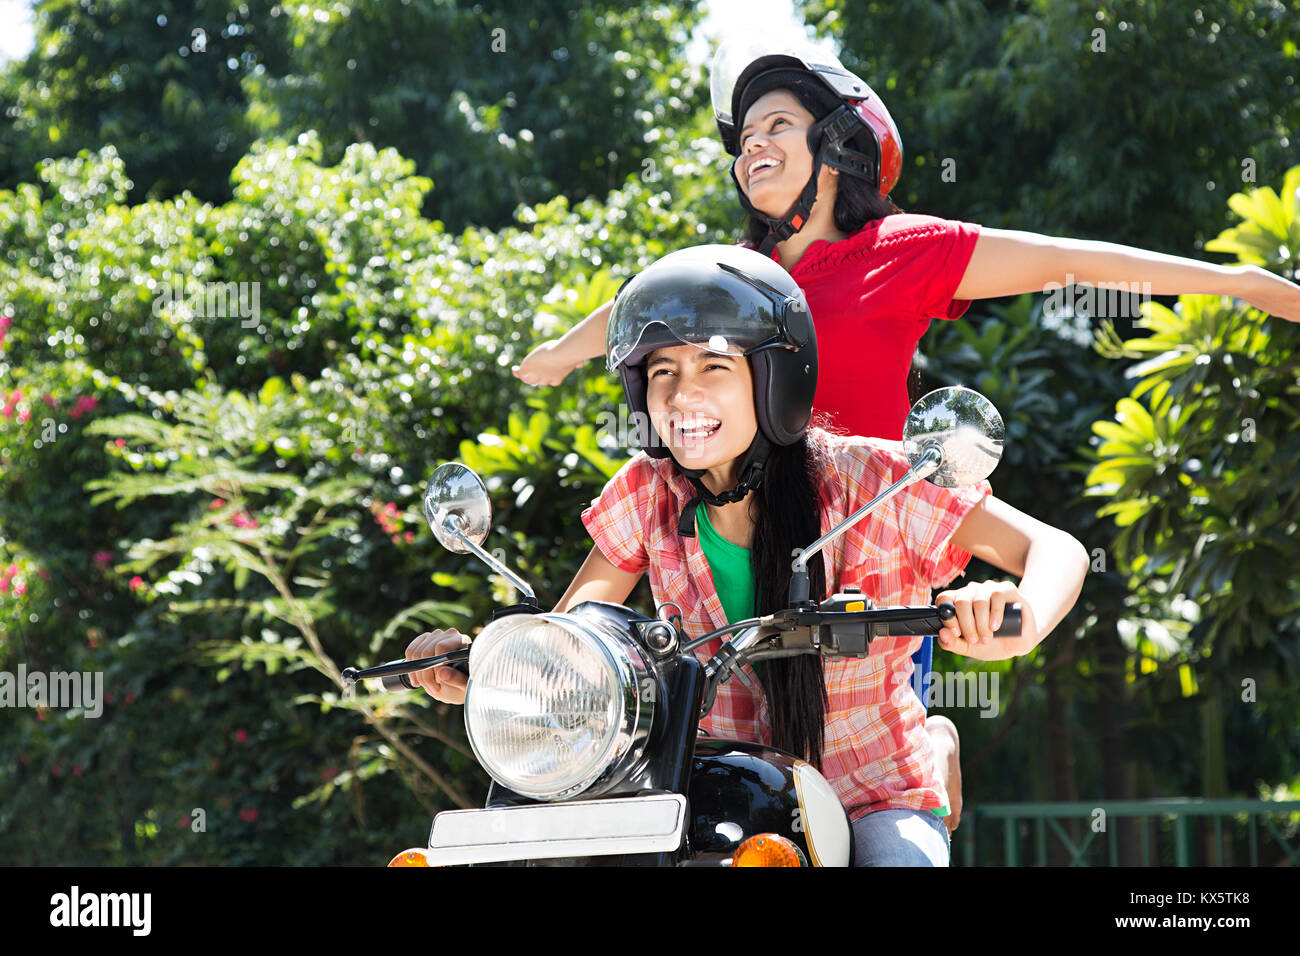 2 Indian Teenage Girls Friend Ride Motorcycle Having Fun Cheerful Stock Photo